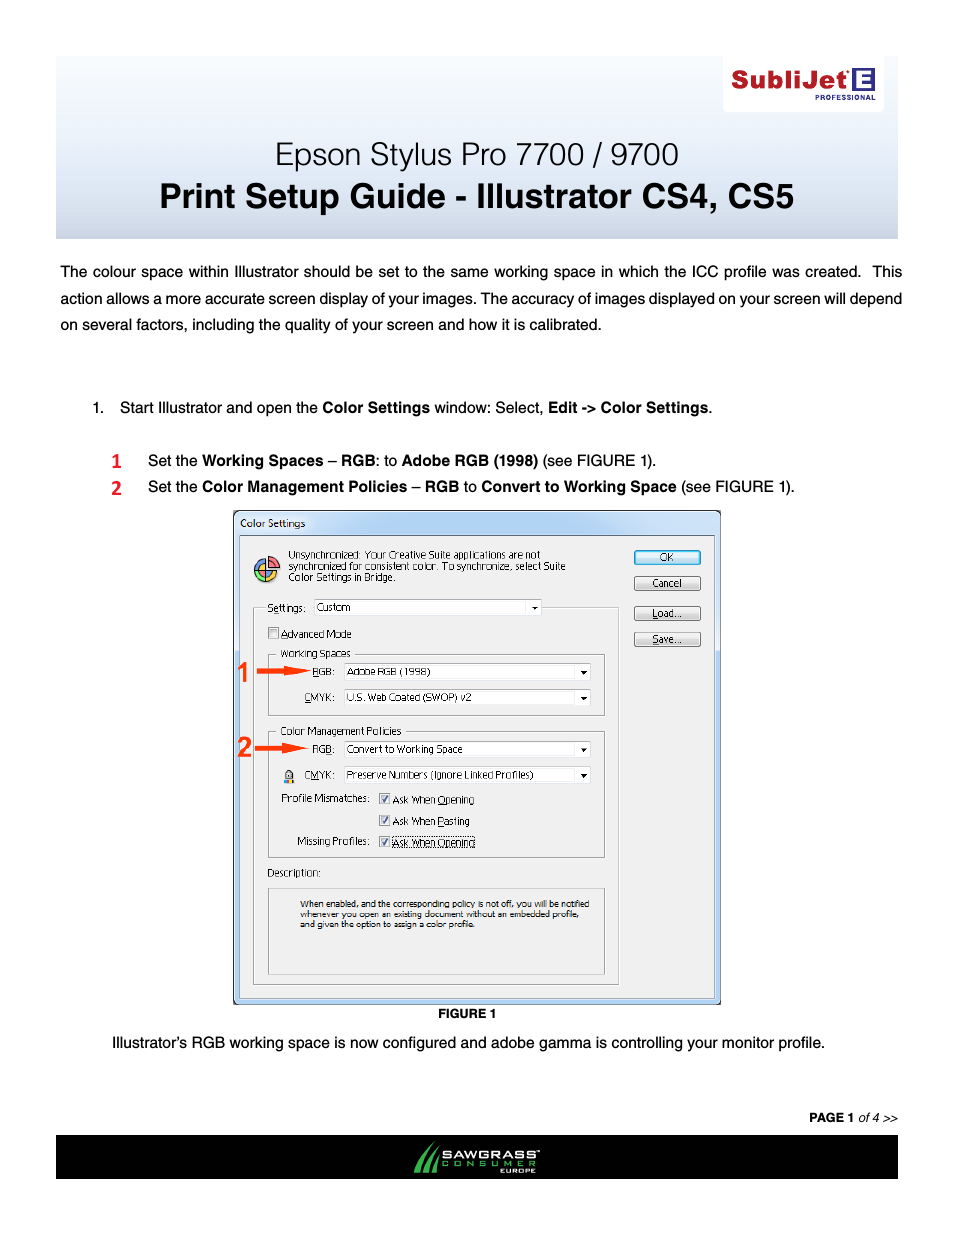 SubliJet E Epson Stylus Pro 7700 (Windows ICC Profile Setup): Print & Setup Guide Illustrator CS4 - CS5